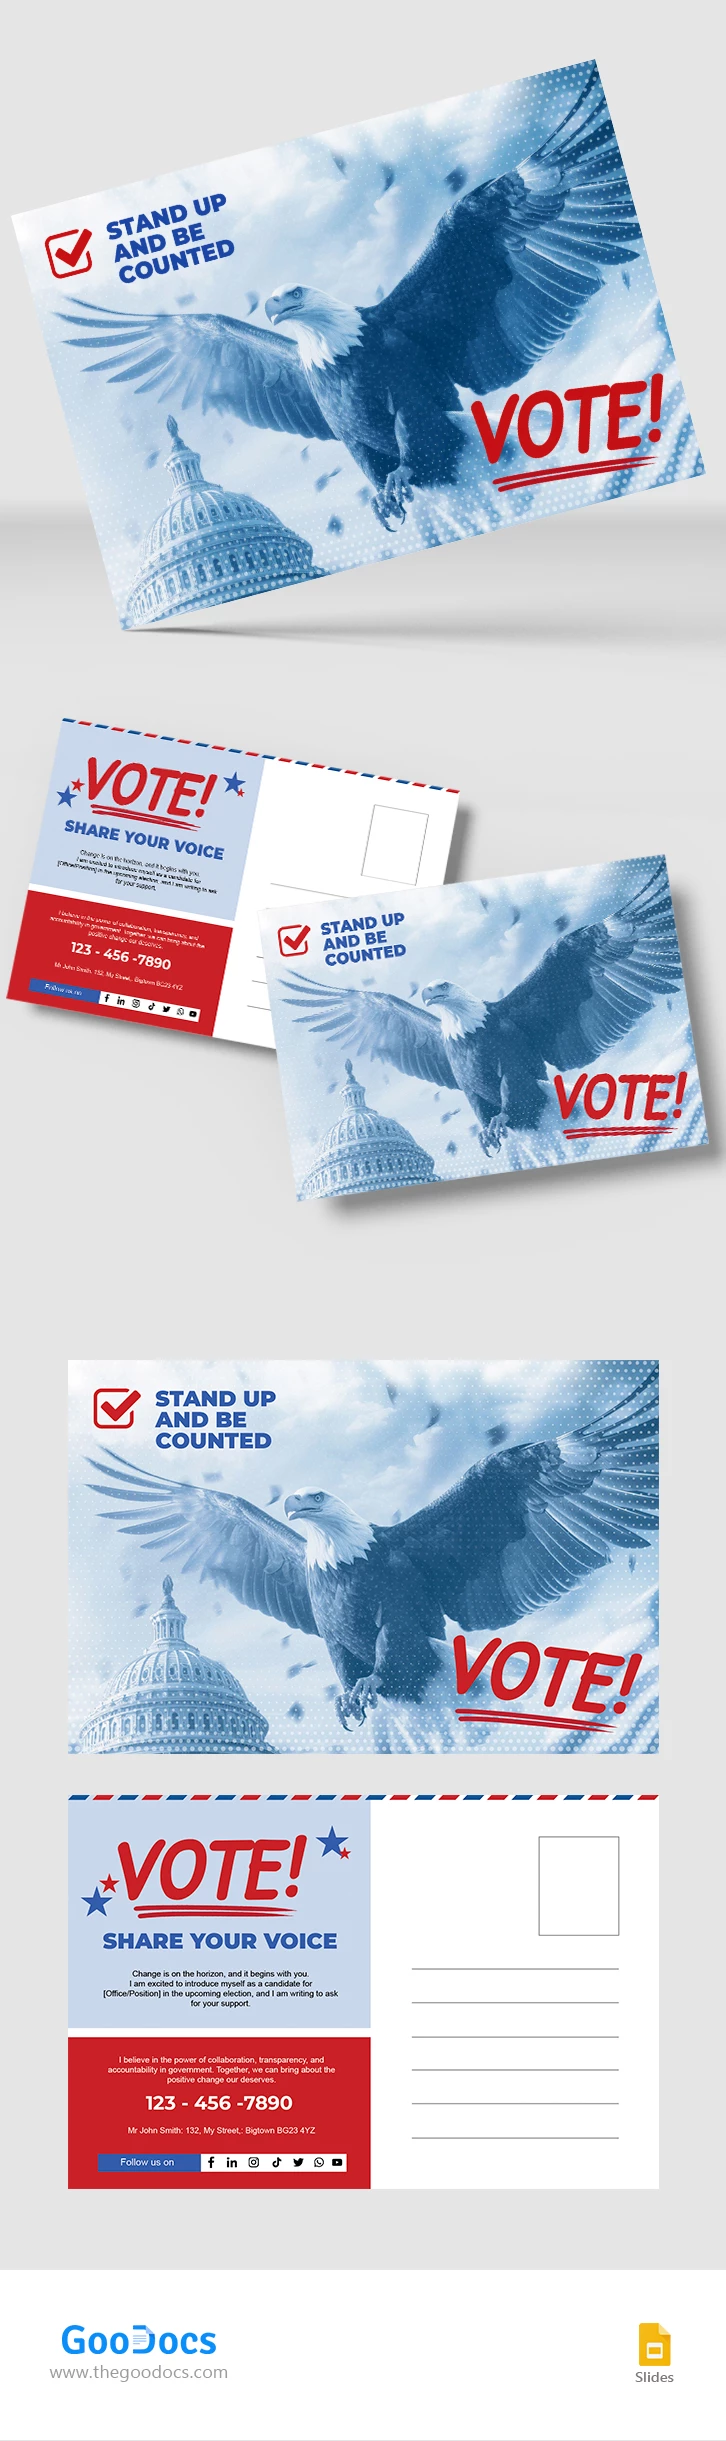 Political Postcard - free Google Docs Template - 10067290